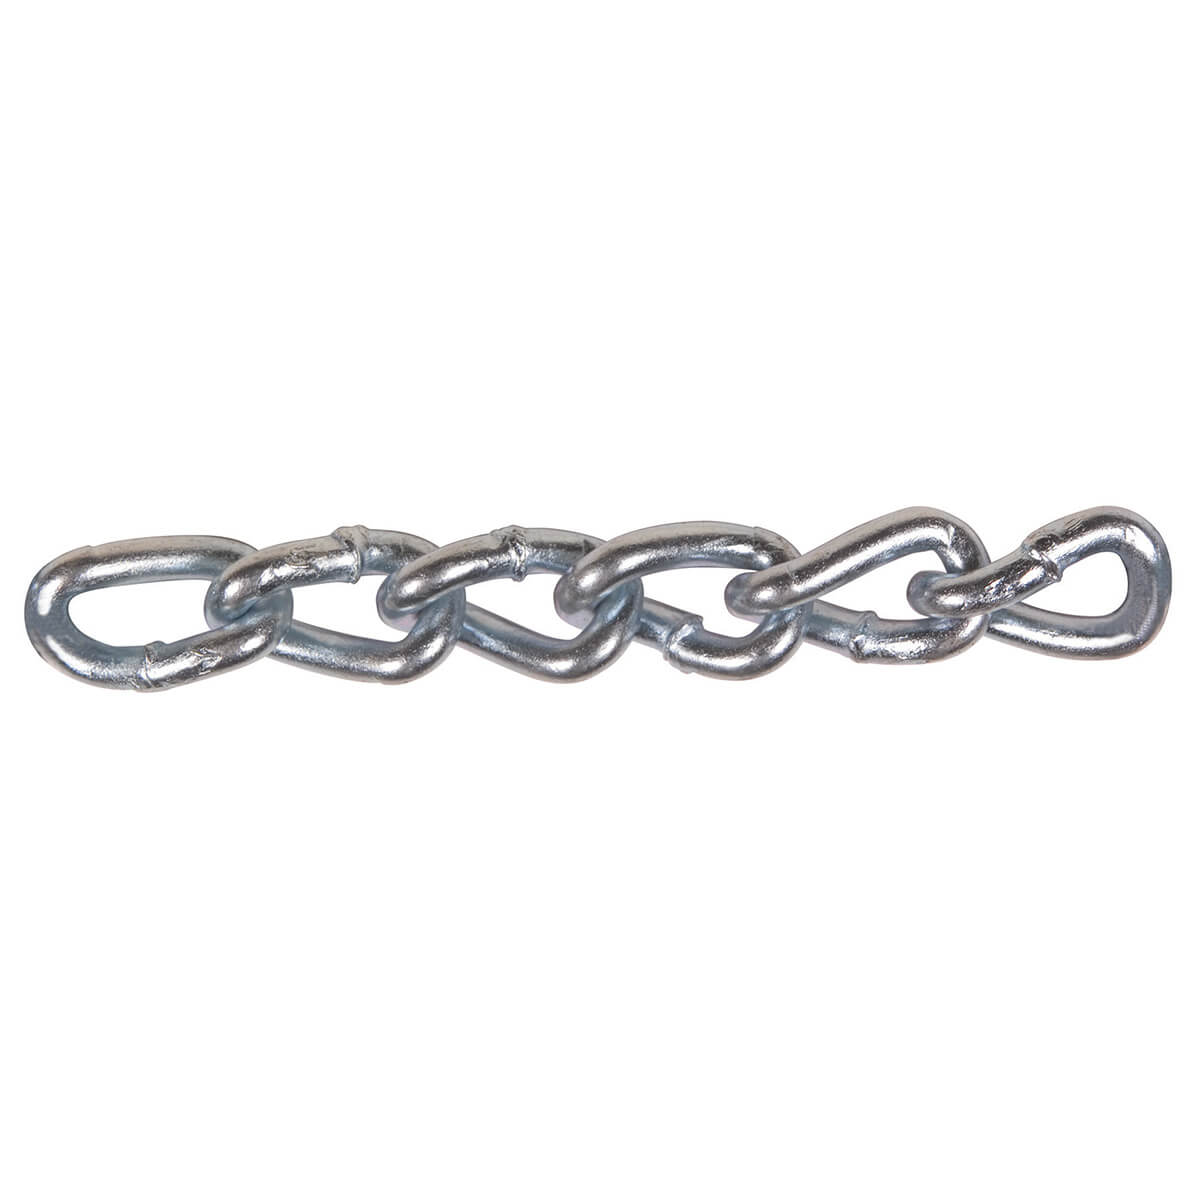 Machine Chain - Low Carbon Steel - Twist Link